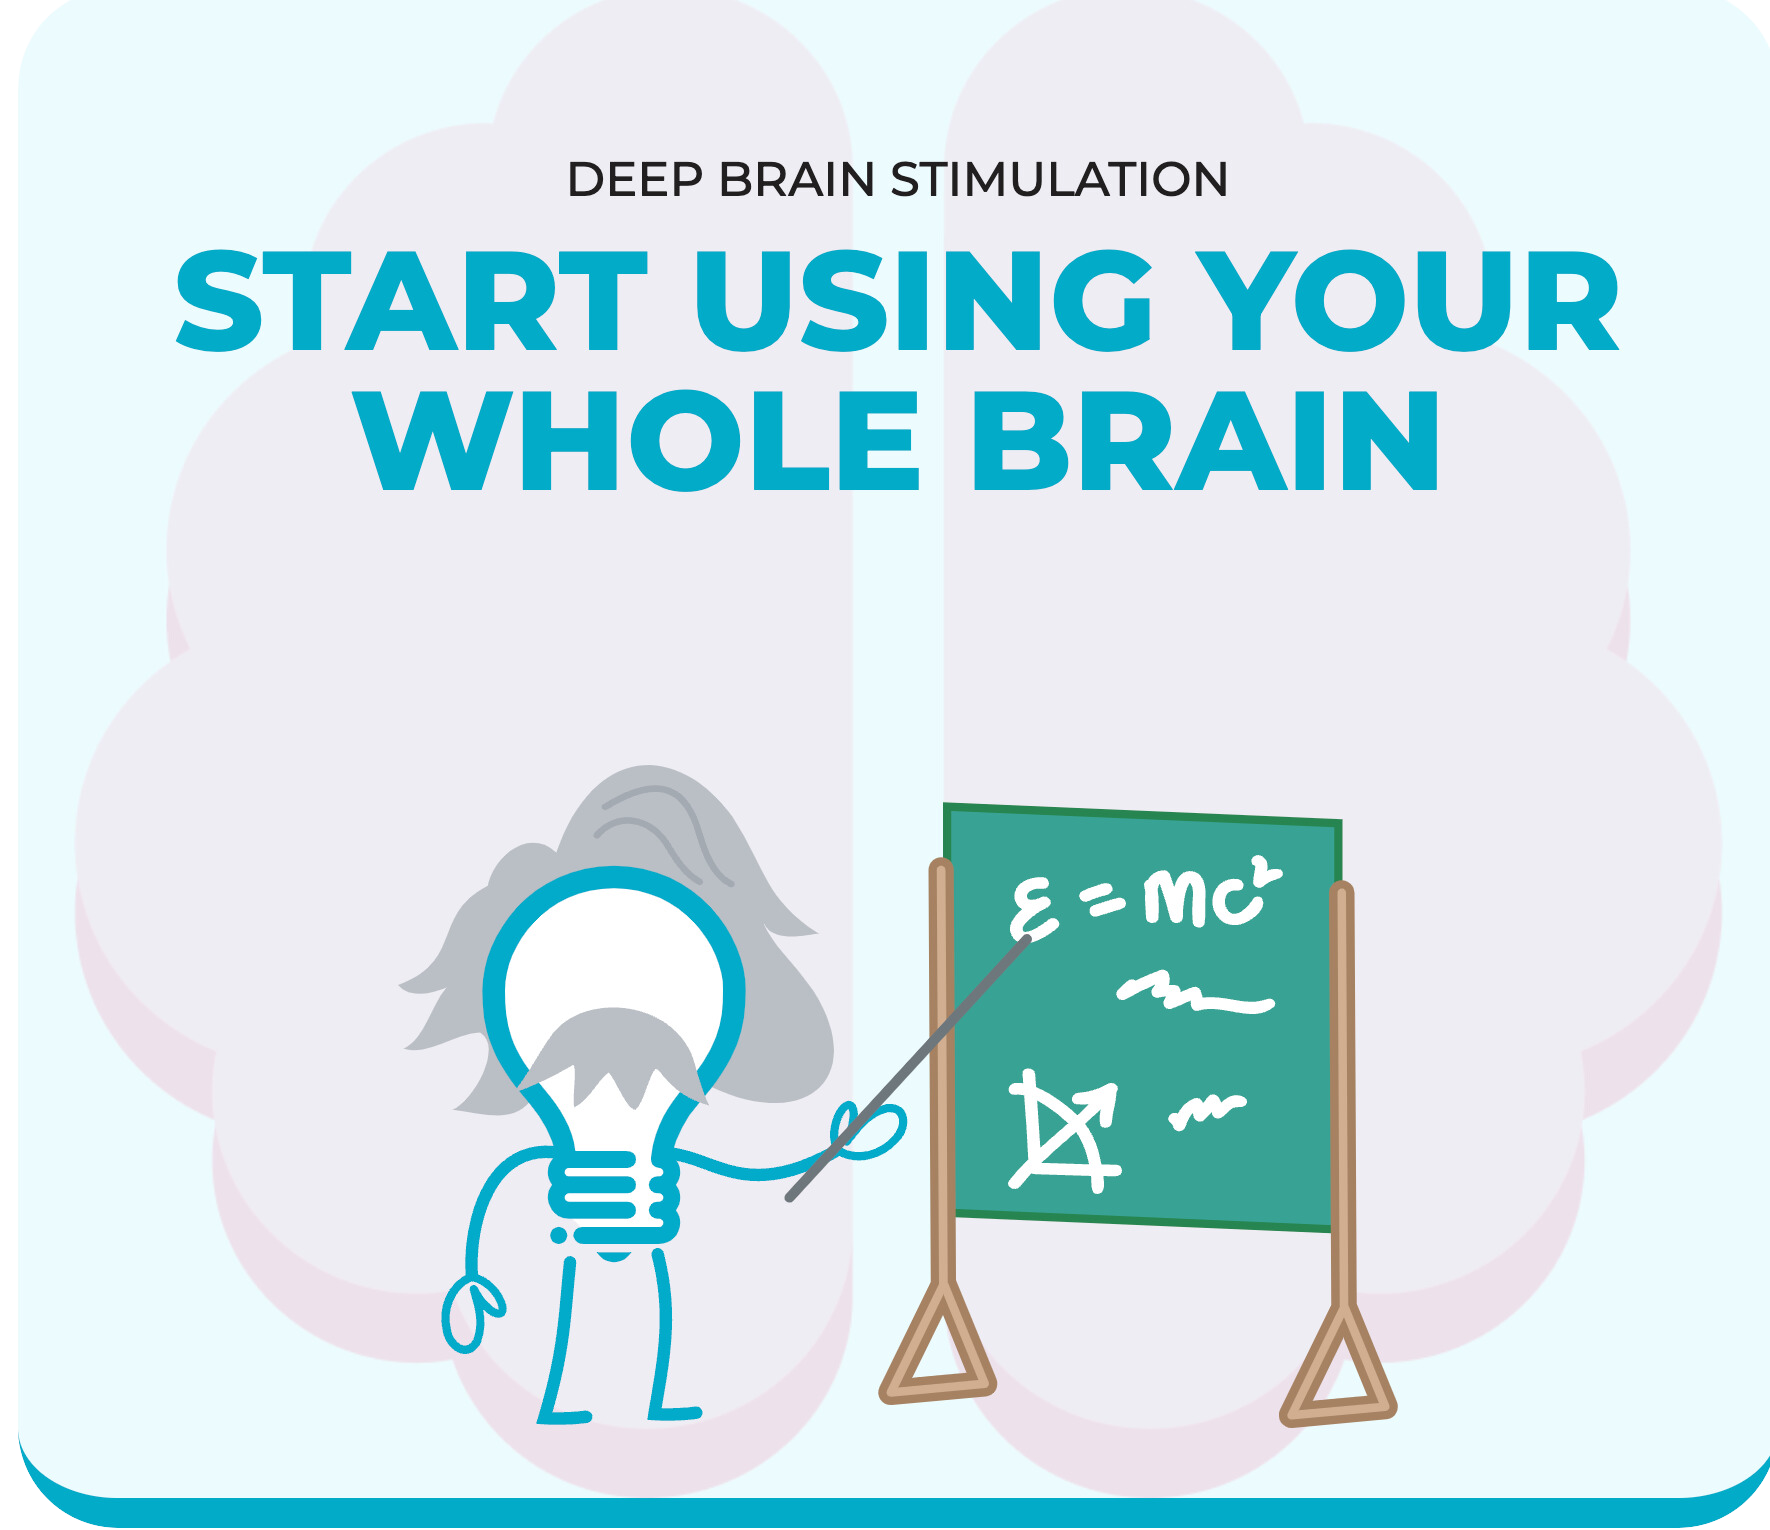 Deep brain stimulation. Start using your whole brain. Watson (our mascot) as Albert Einstein with a board.